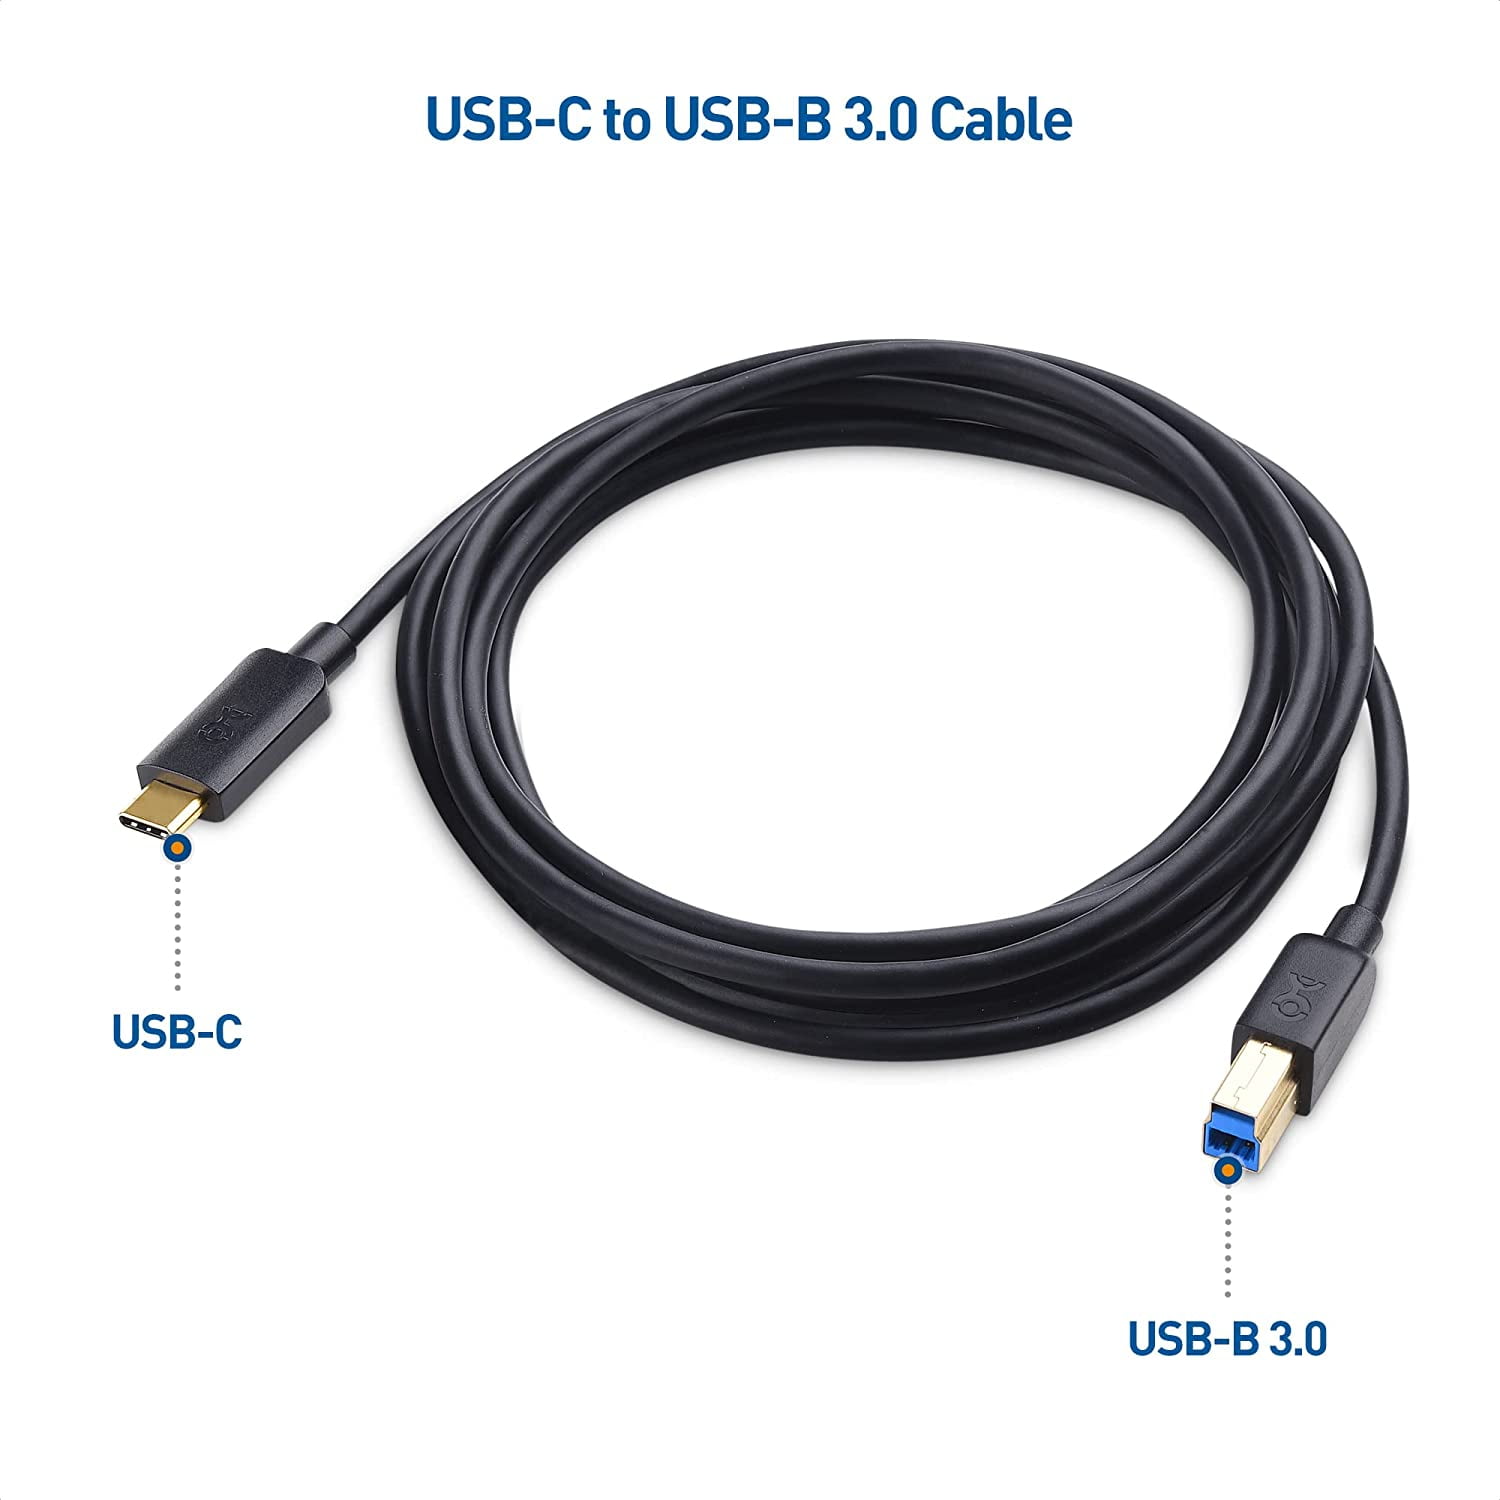 Cable Matters Type-C USB 3.1 Type B C USB B 3.0 / Type-C USB 3.1 to USB B) Black 6.6 Feet - Walmart.com